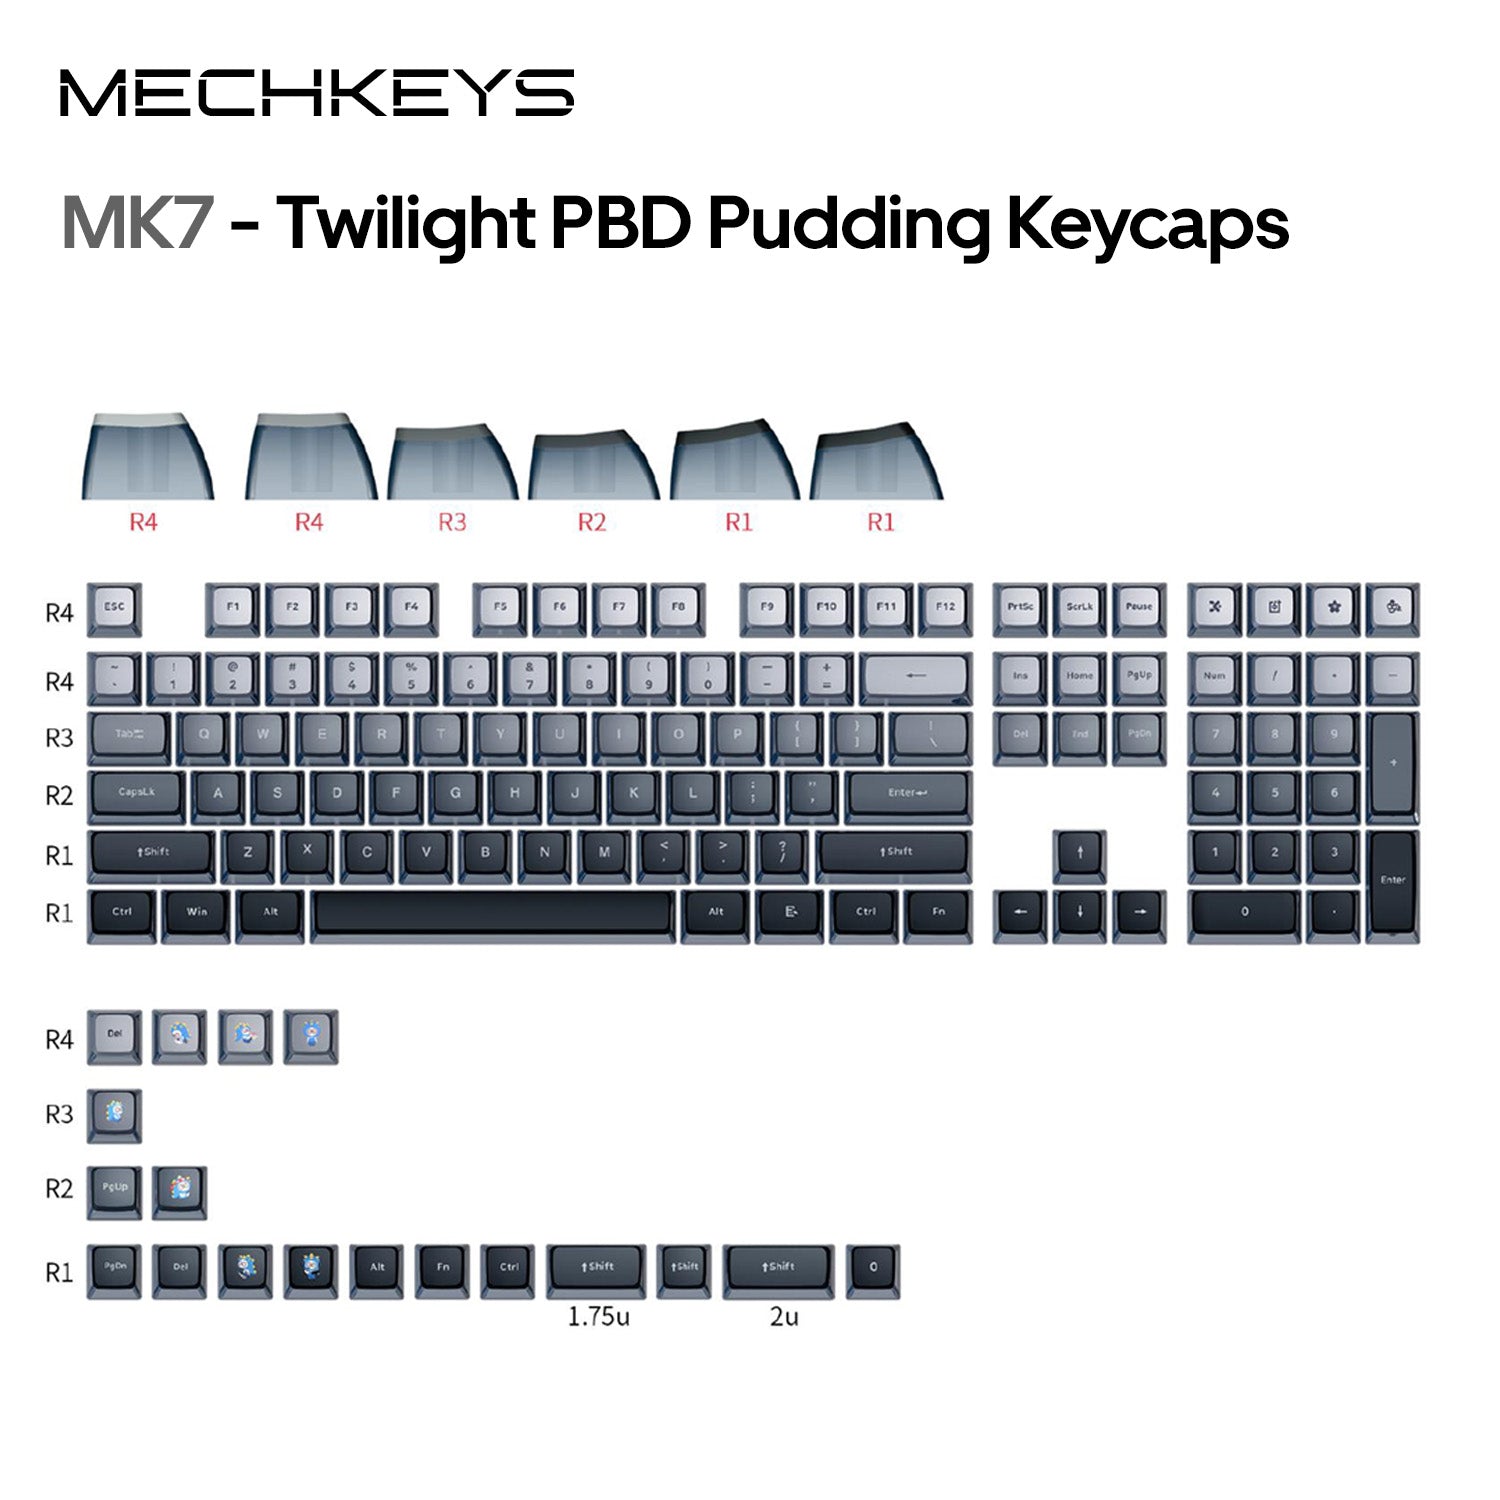 OVERCLOCK MECHKEYS Twilight PBT Pudding Keycaps